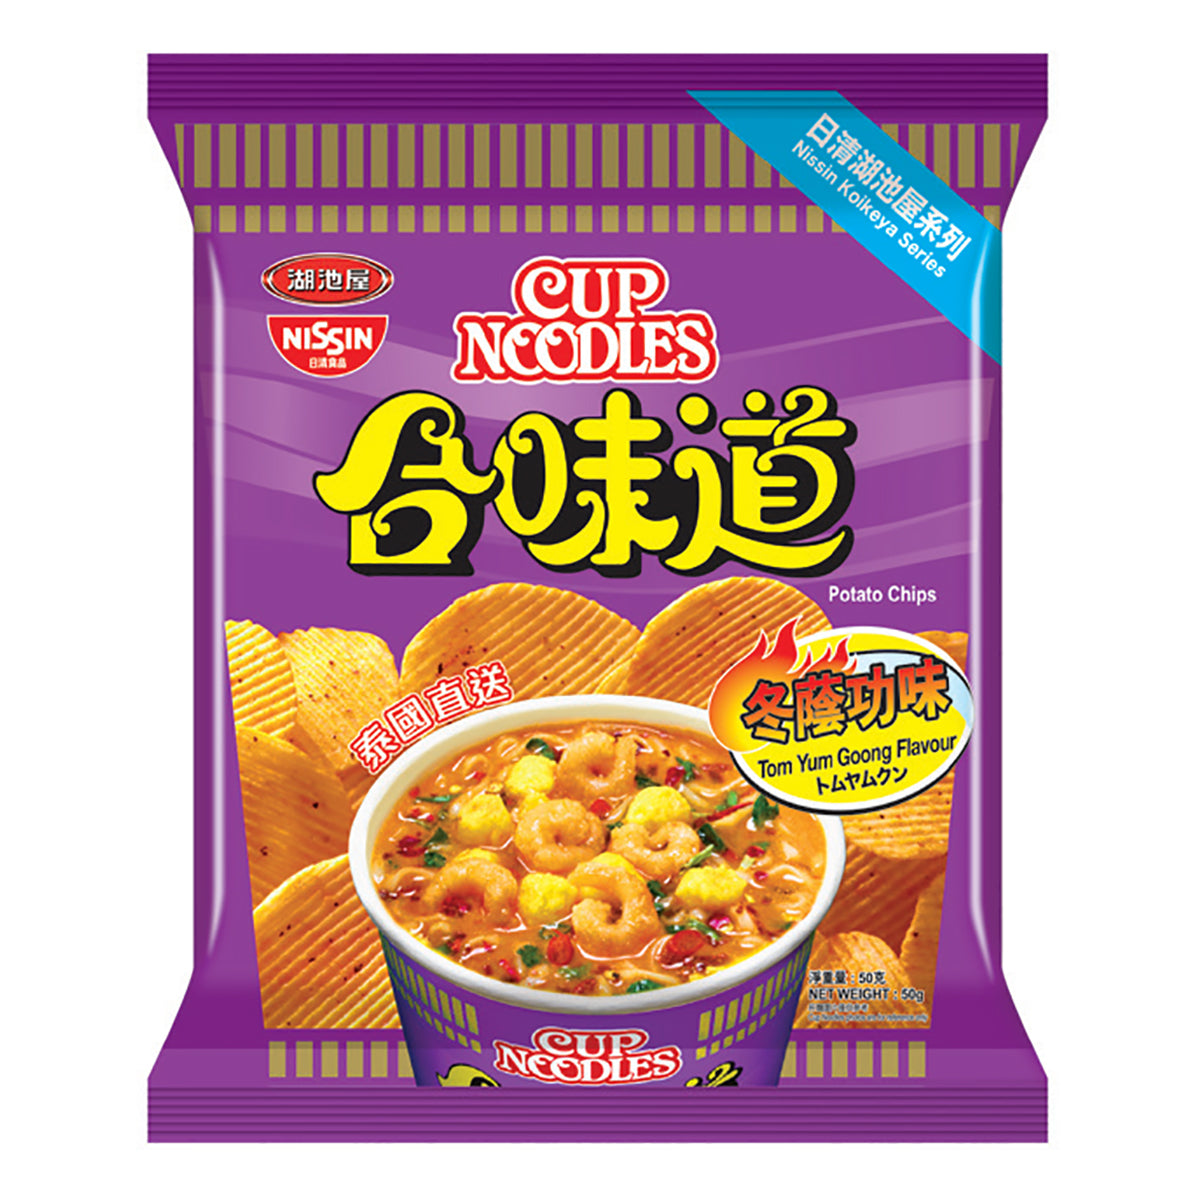 cup noodles potato chips tom yum - 50g